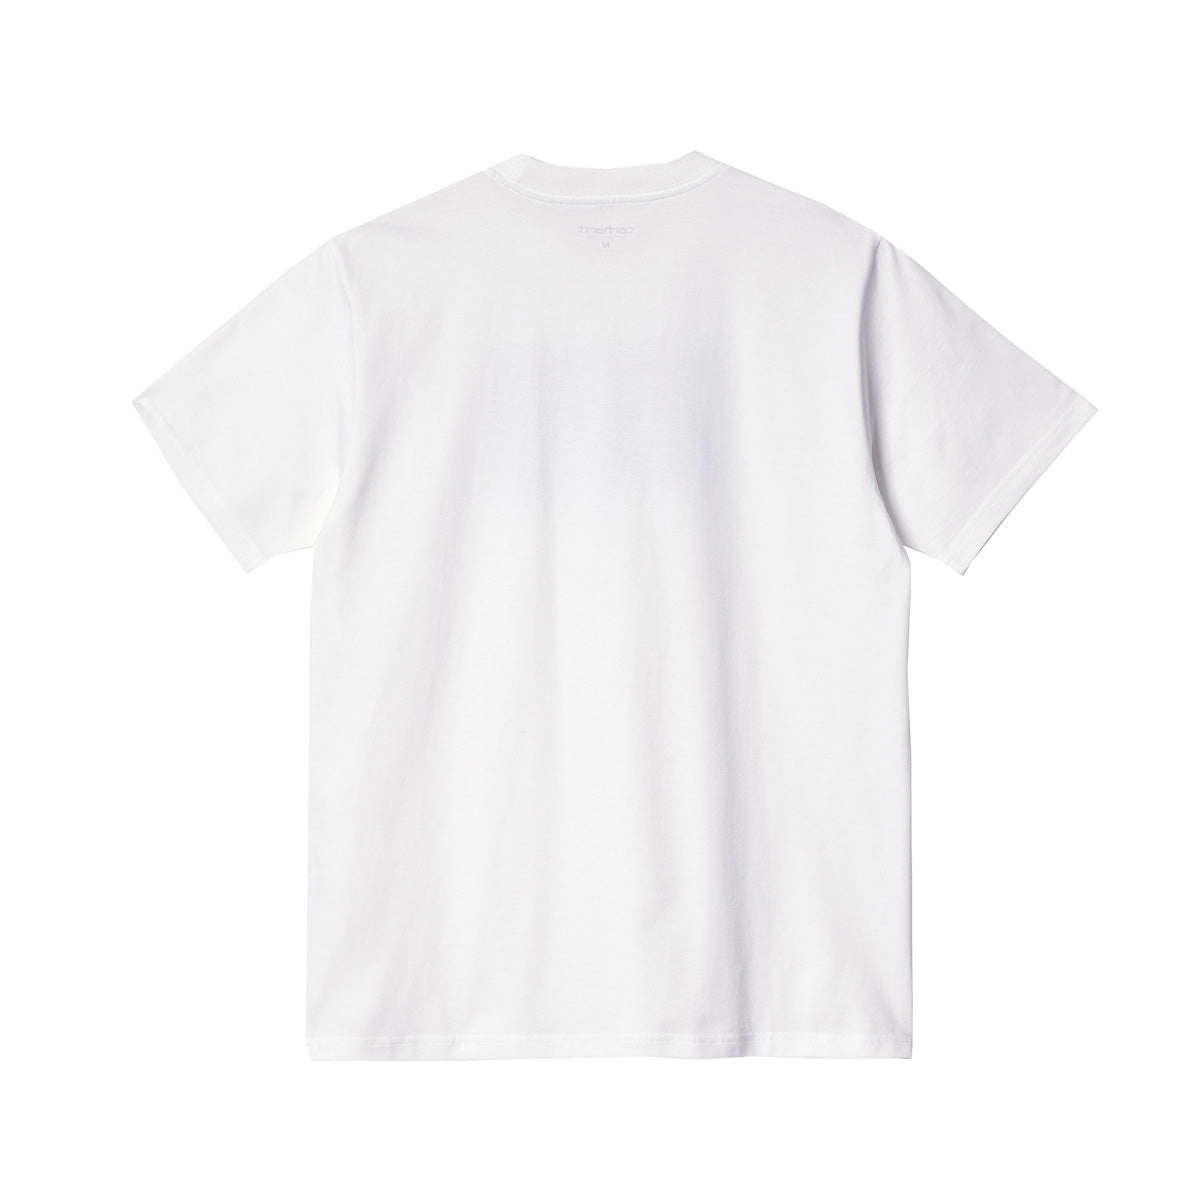 Carhartt WIP S/S Great Outdoors T-Shirt White